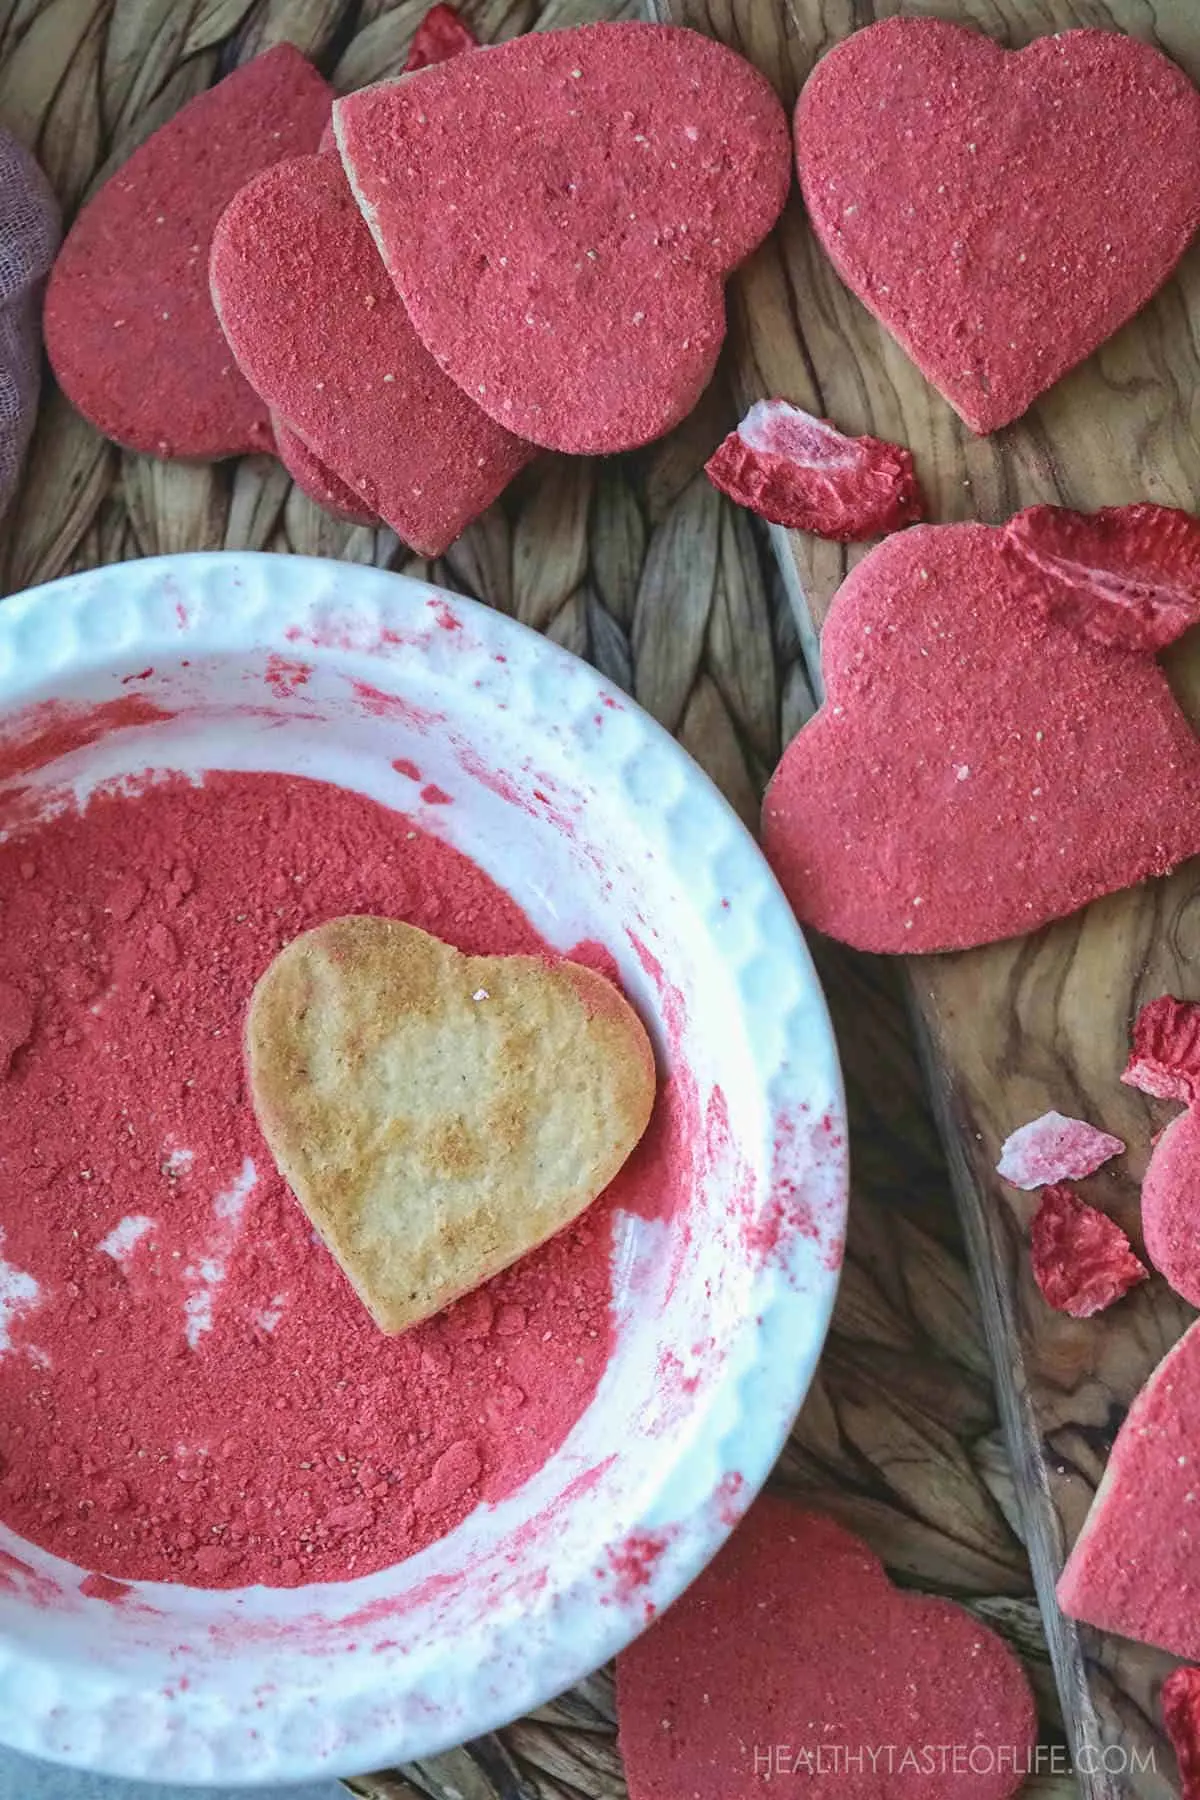 Dredging the vegan cookies in strawberry powder.